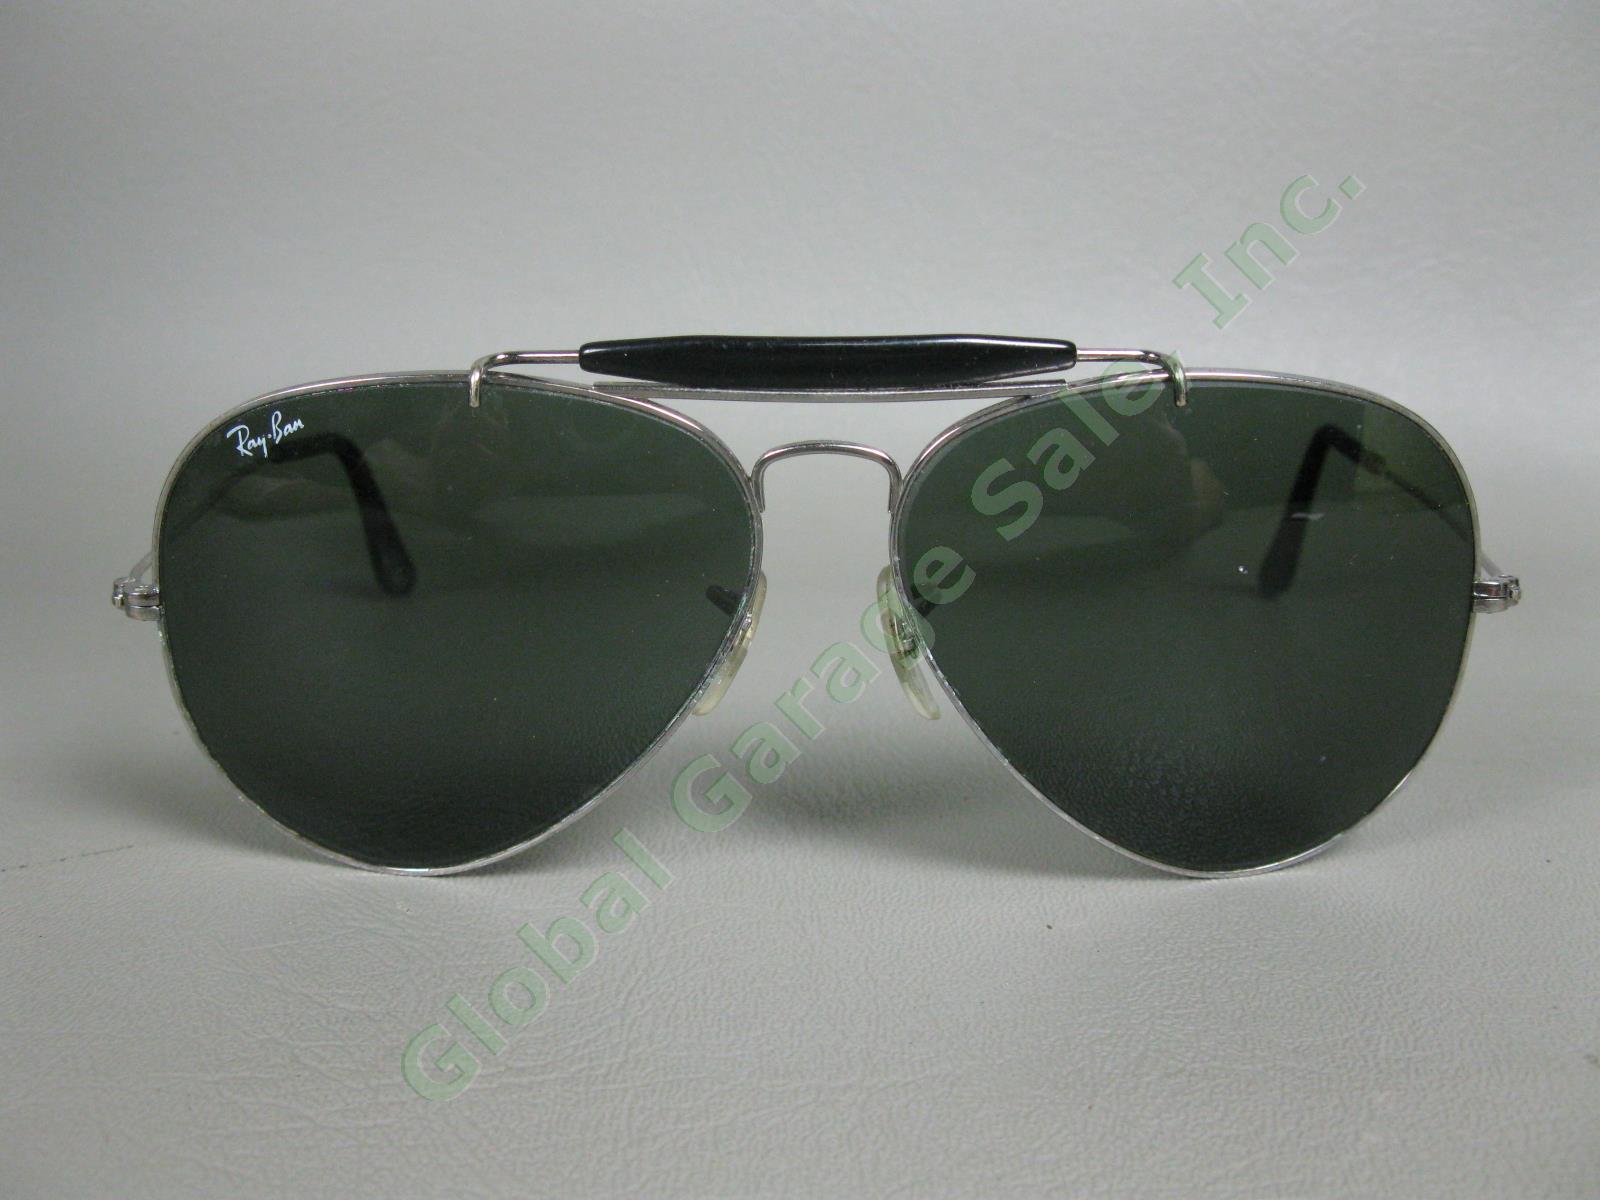 Vtg Bausch + Lomb Ray-Ban Large Aviator Sunglasses 62-14 Green Lenses w/ Case 1